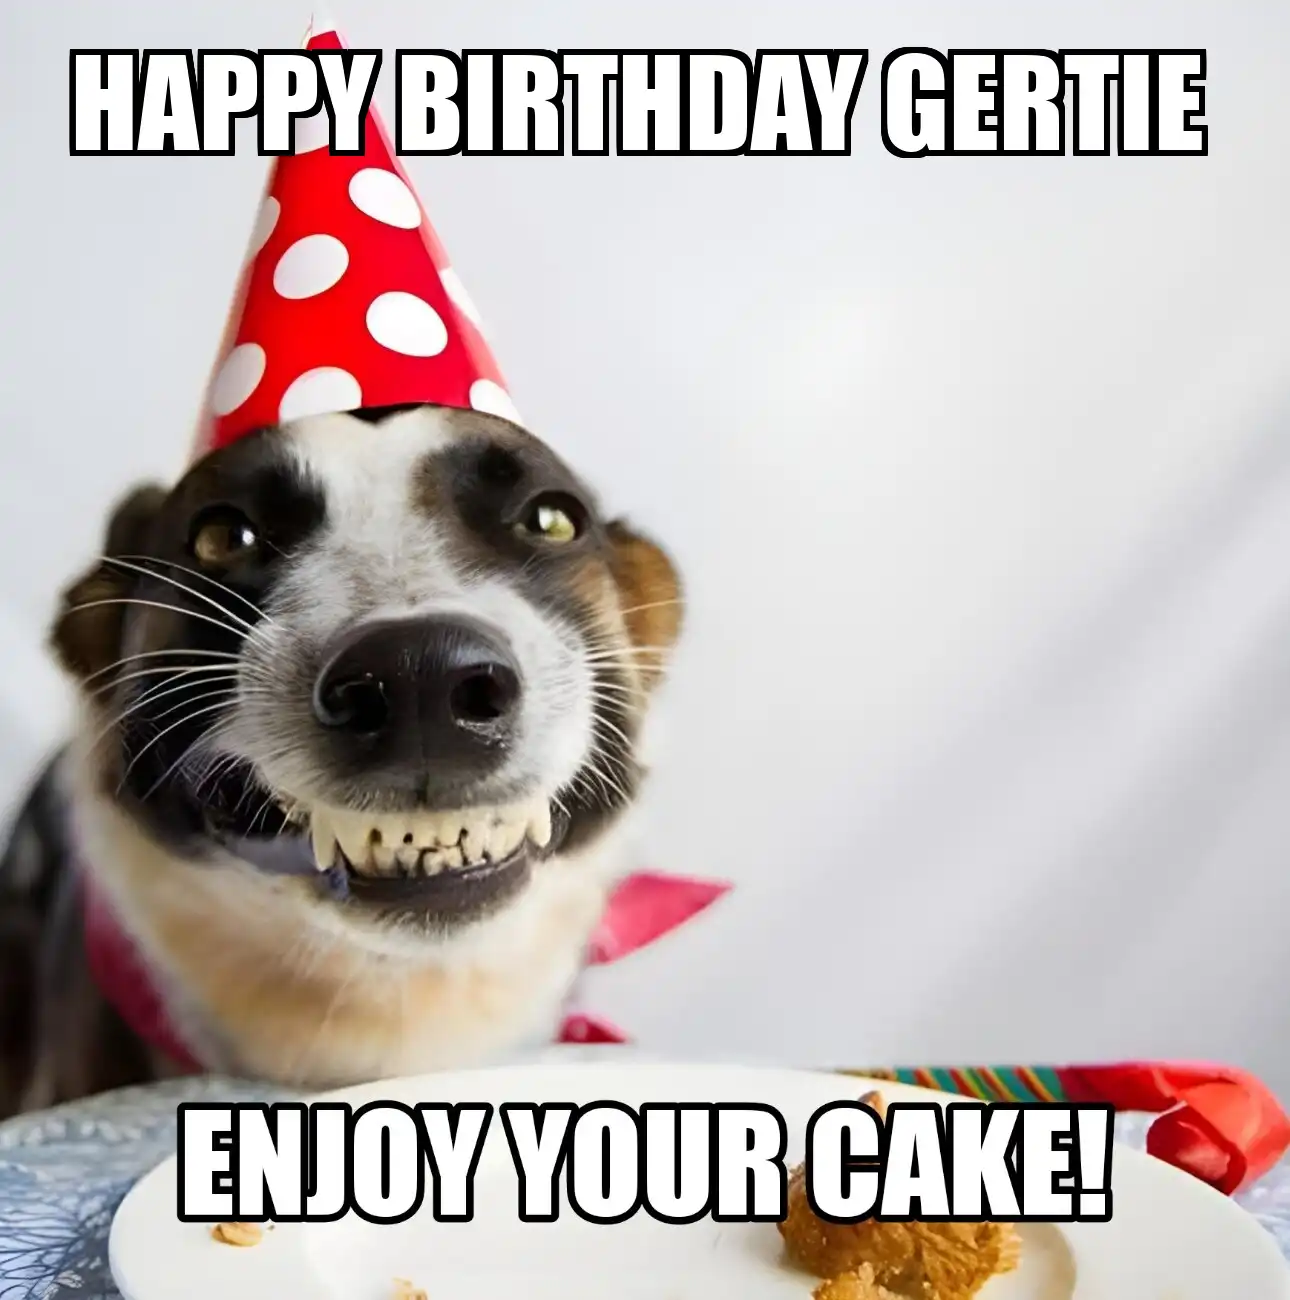 Happy Birthday Gertie Enjoy Your Cake Dog Meme